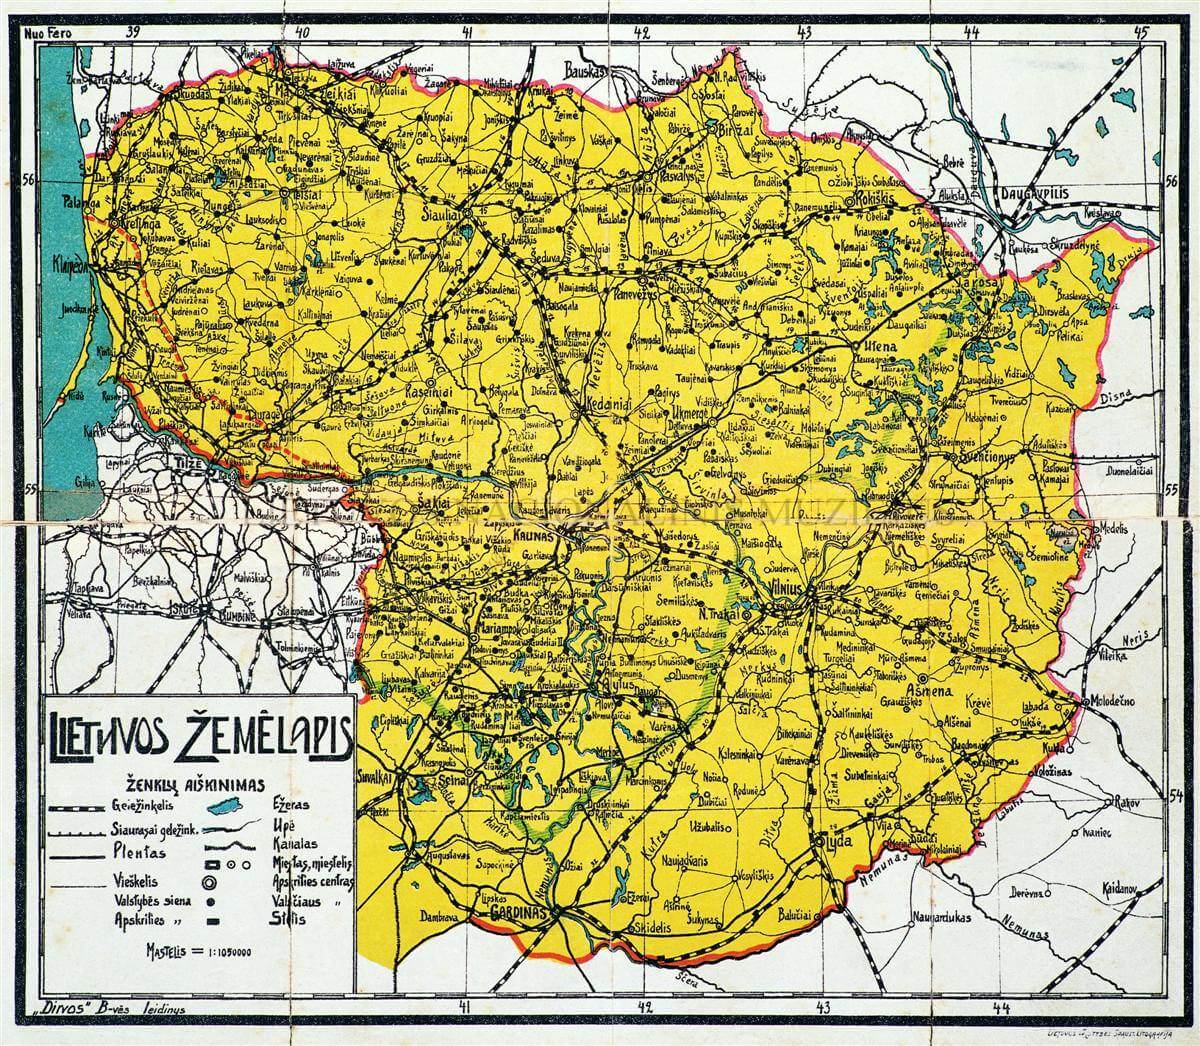 Lietuvos žemėlapis (Dirvos b-vės leidinys).jpg